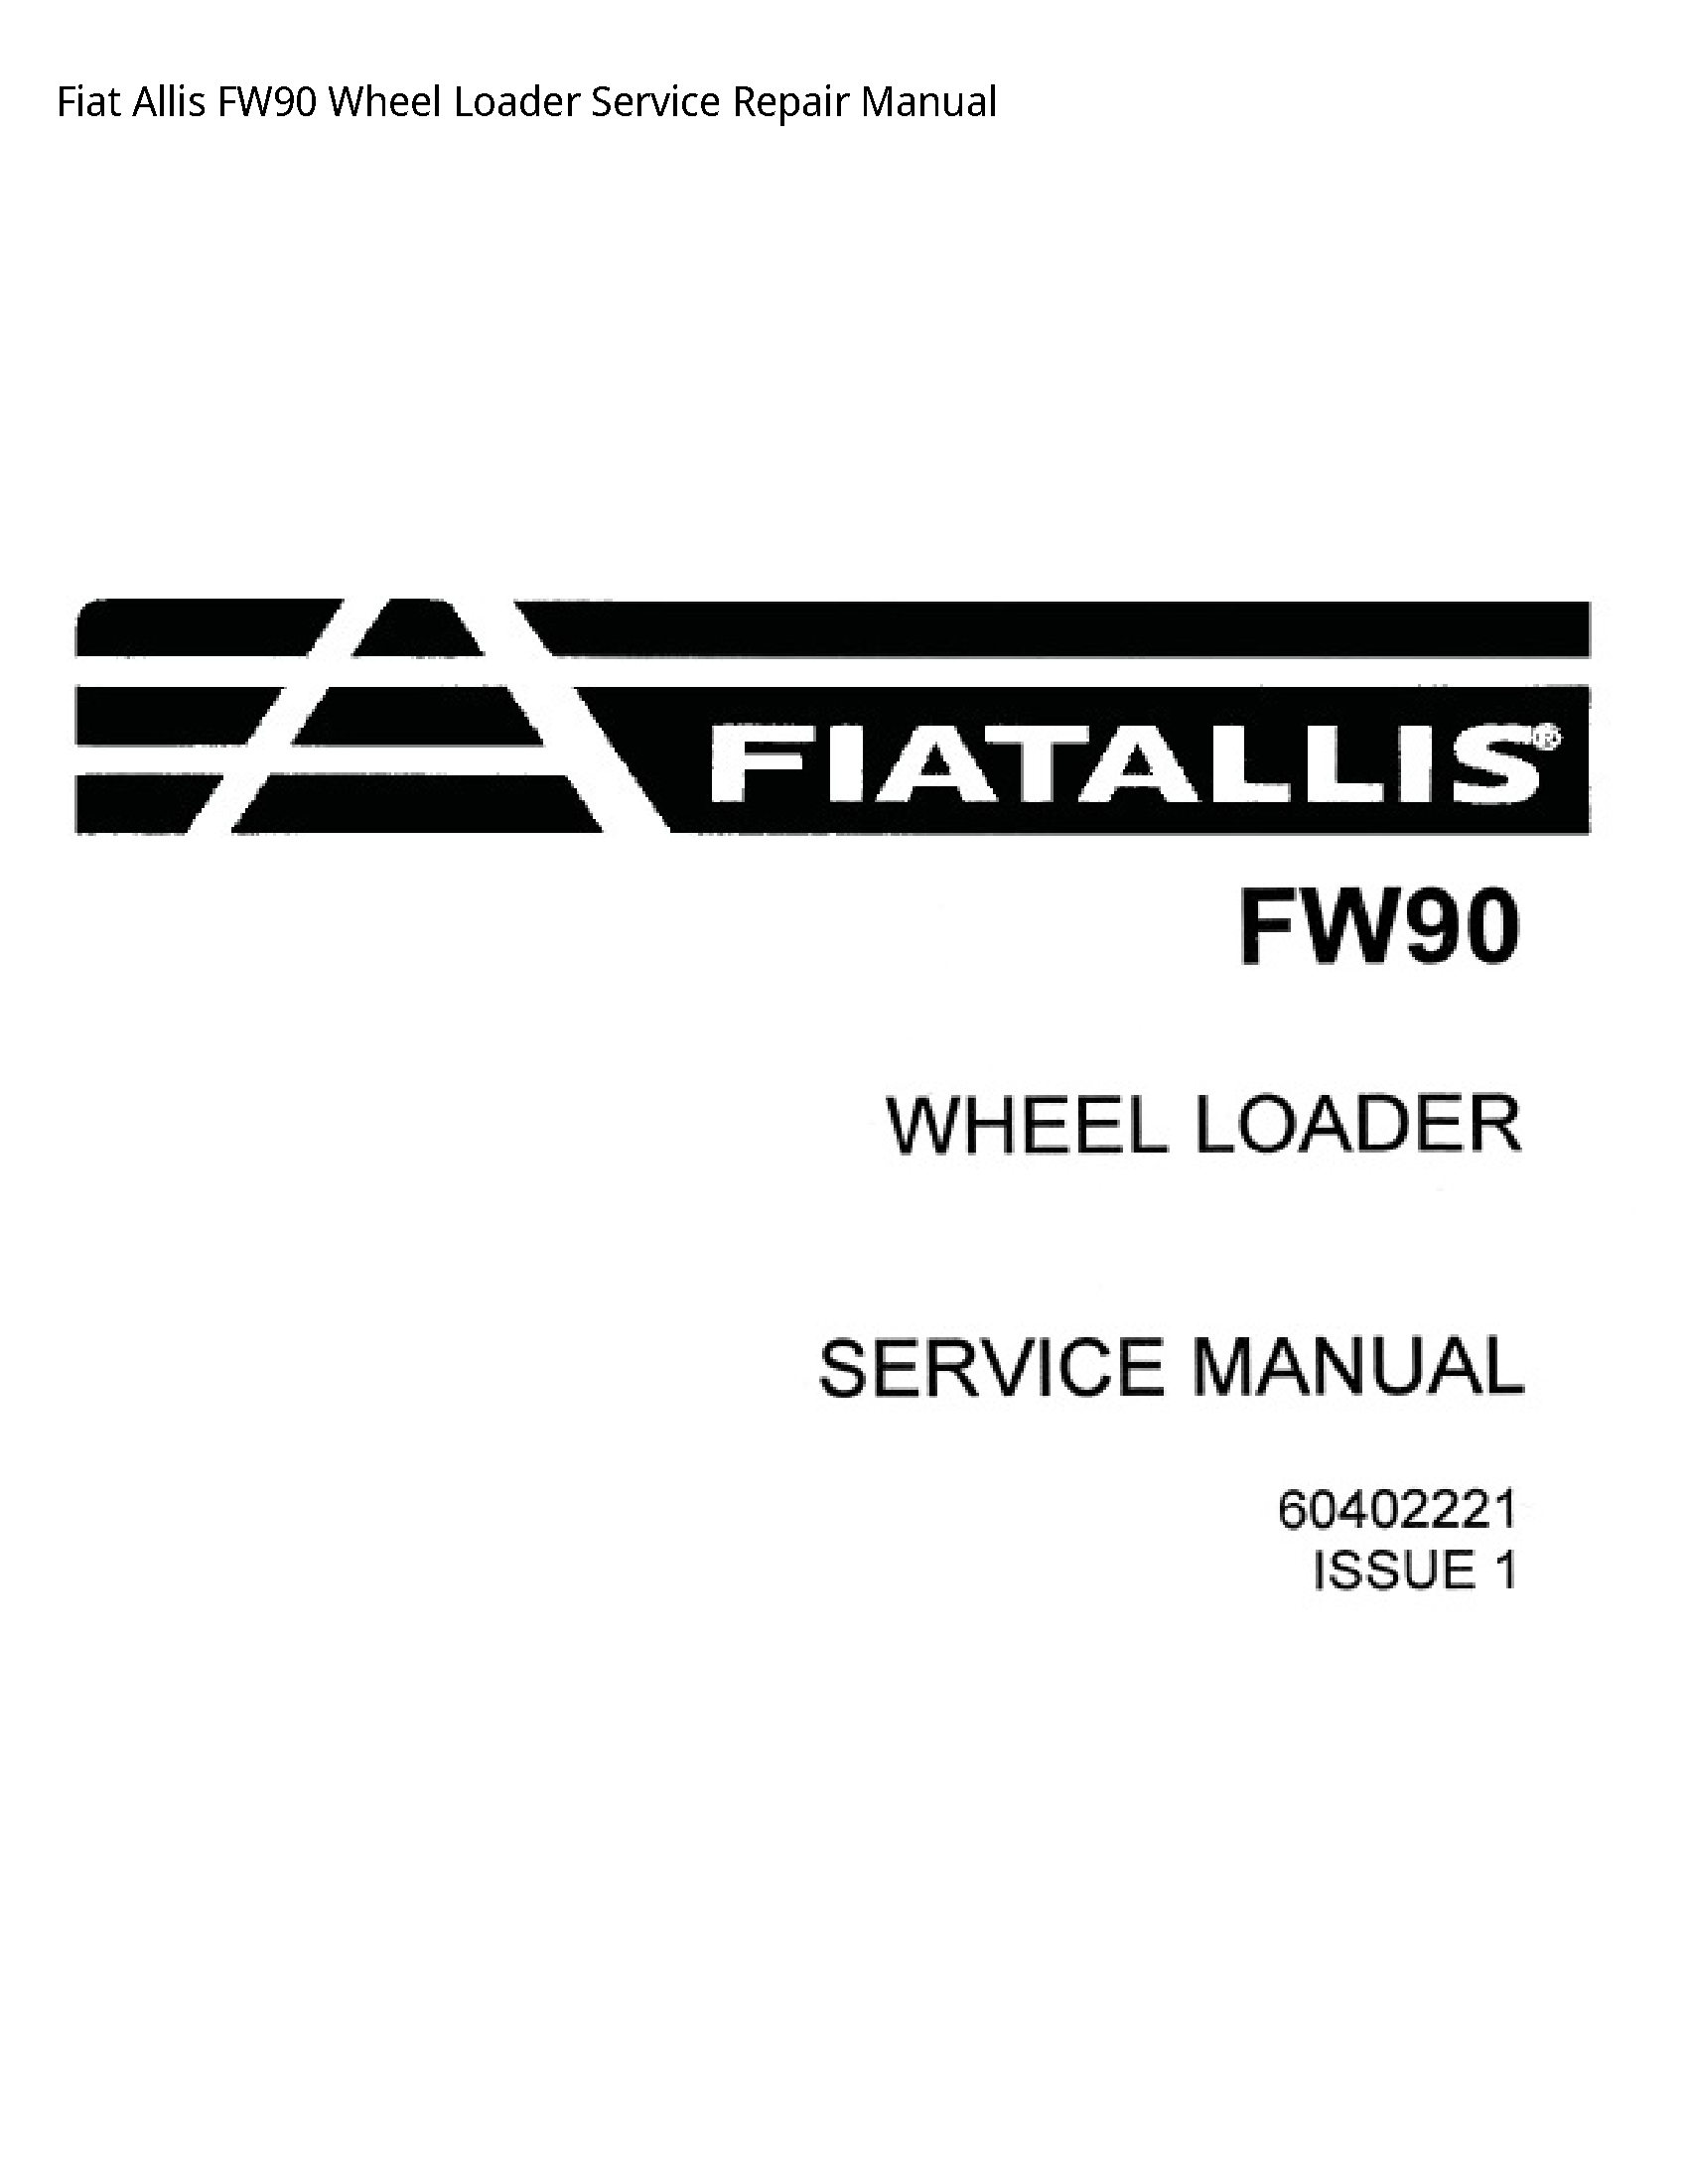 Fiat Allis FW90 Wheel Loader manual